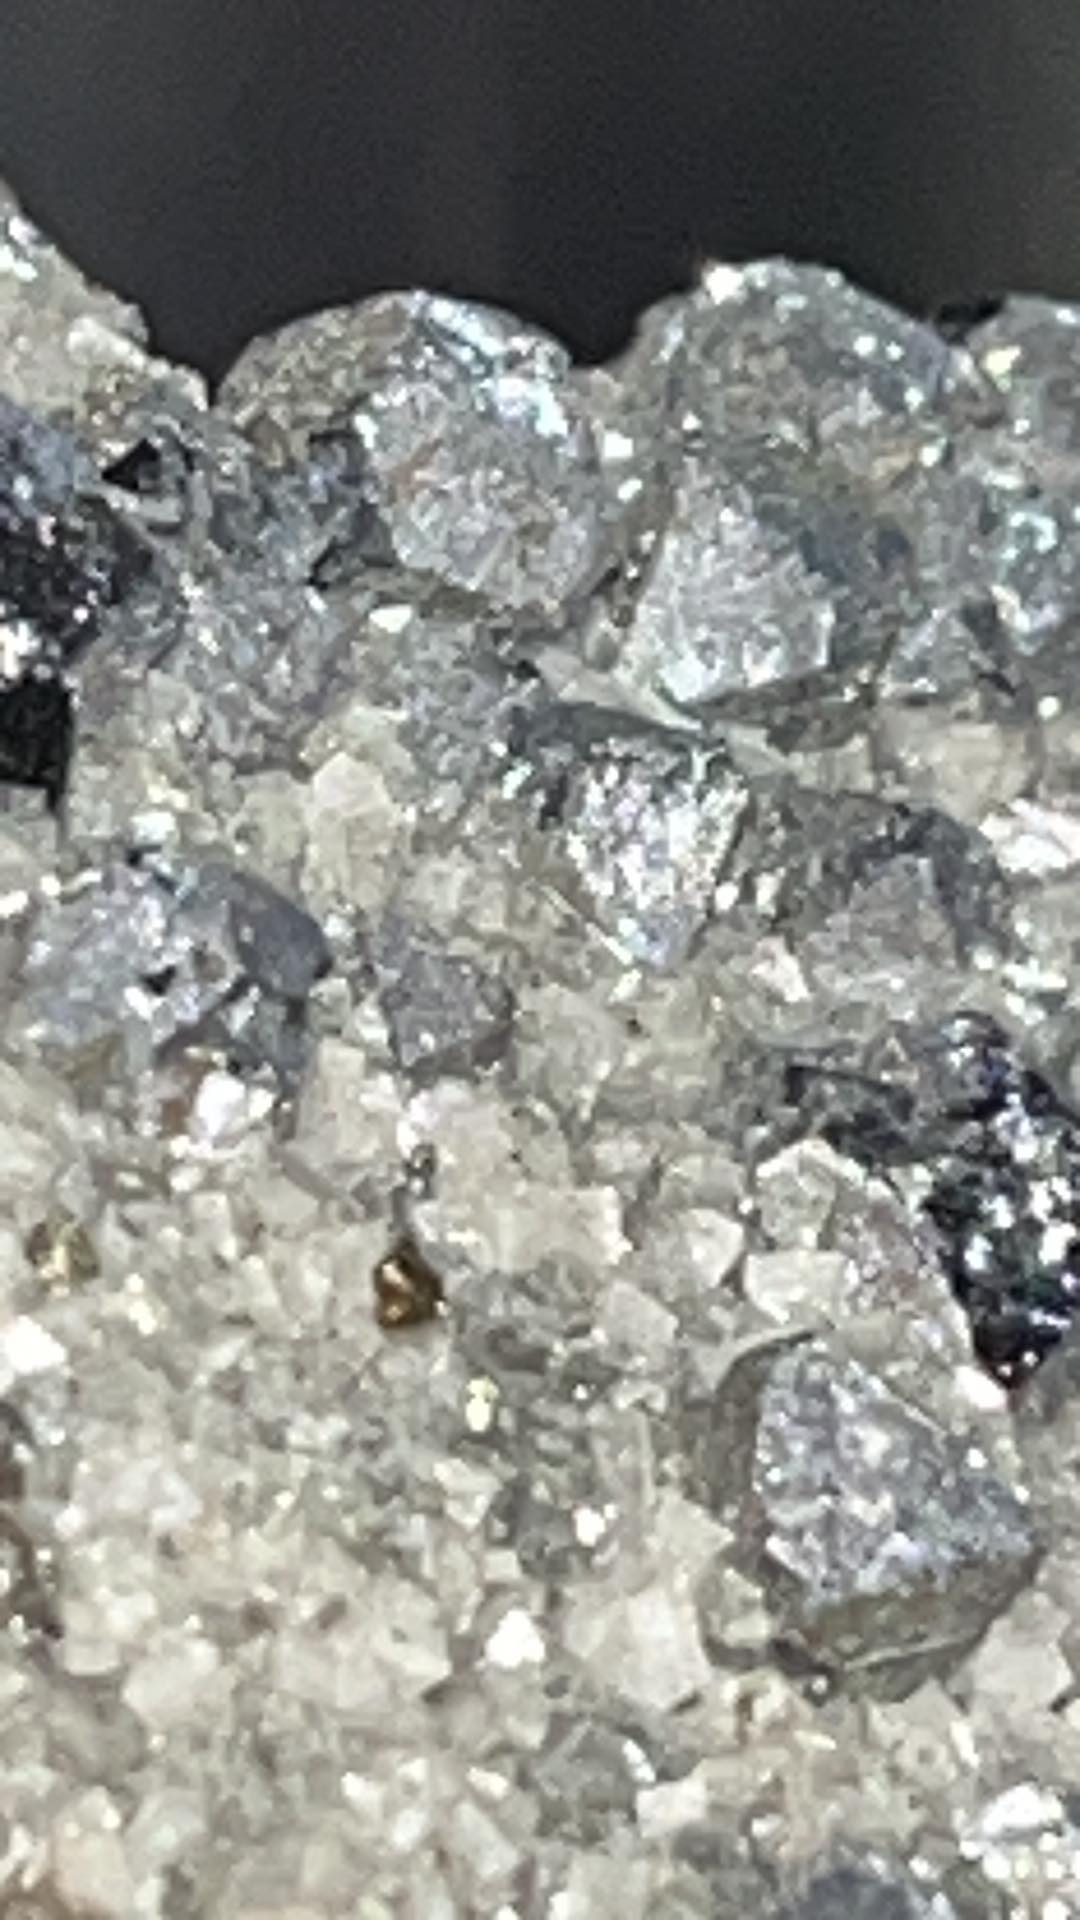 VERY RARE Cubic and Dipyramidal Galena Crystal specimen from Borieva Mine Bulgaria